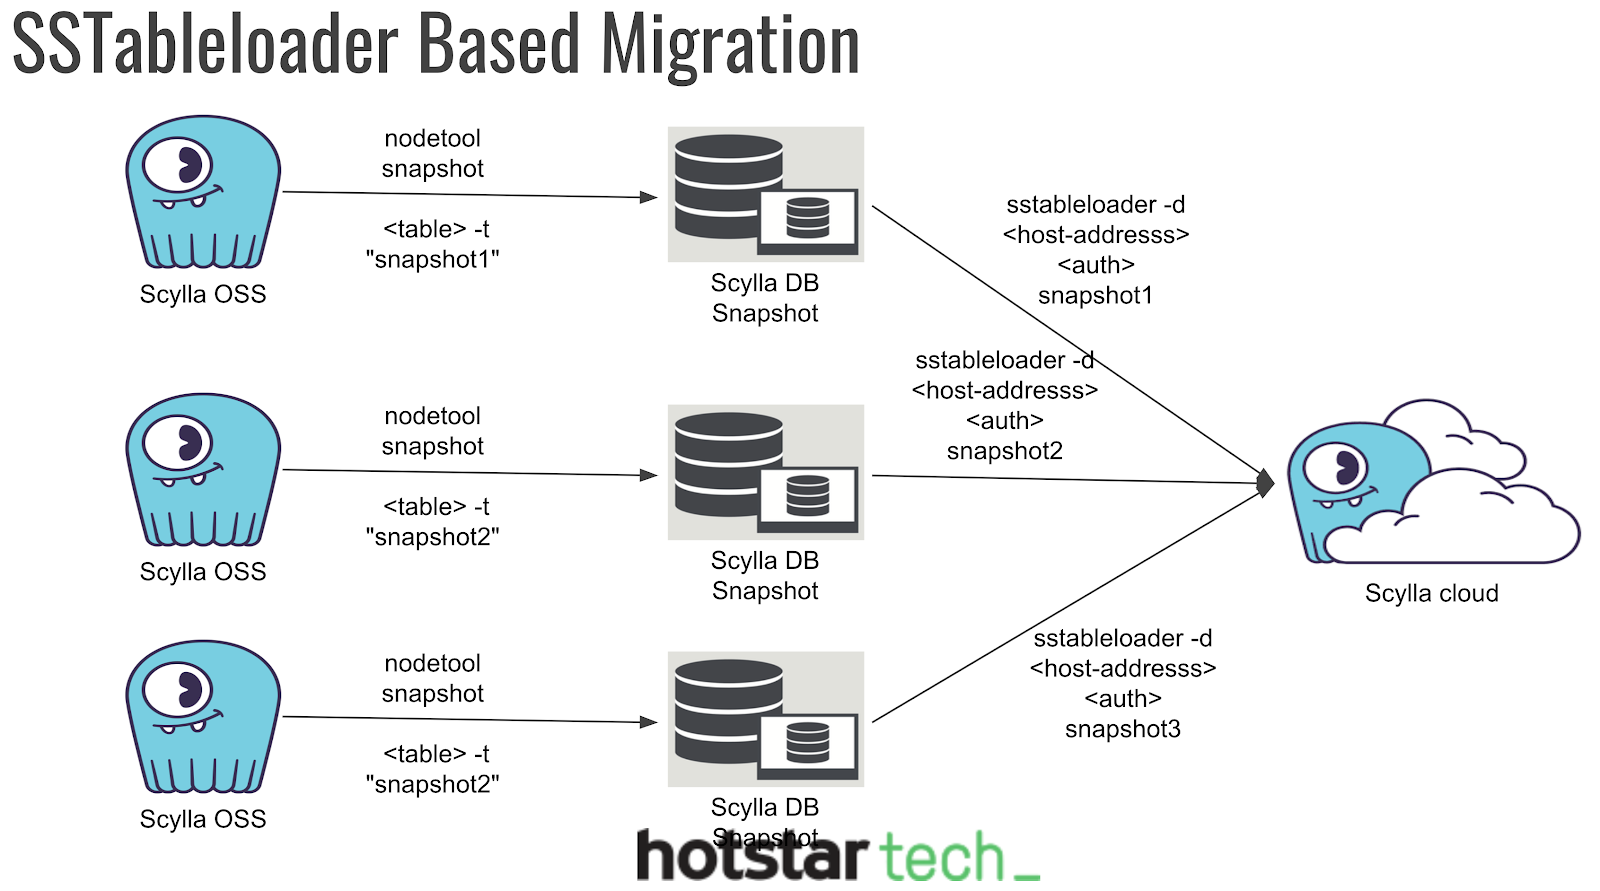 ¿Cómo usa Hotstar Big Data?